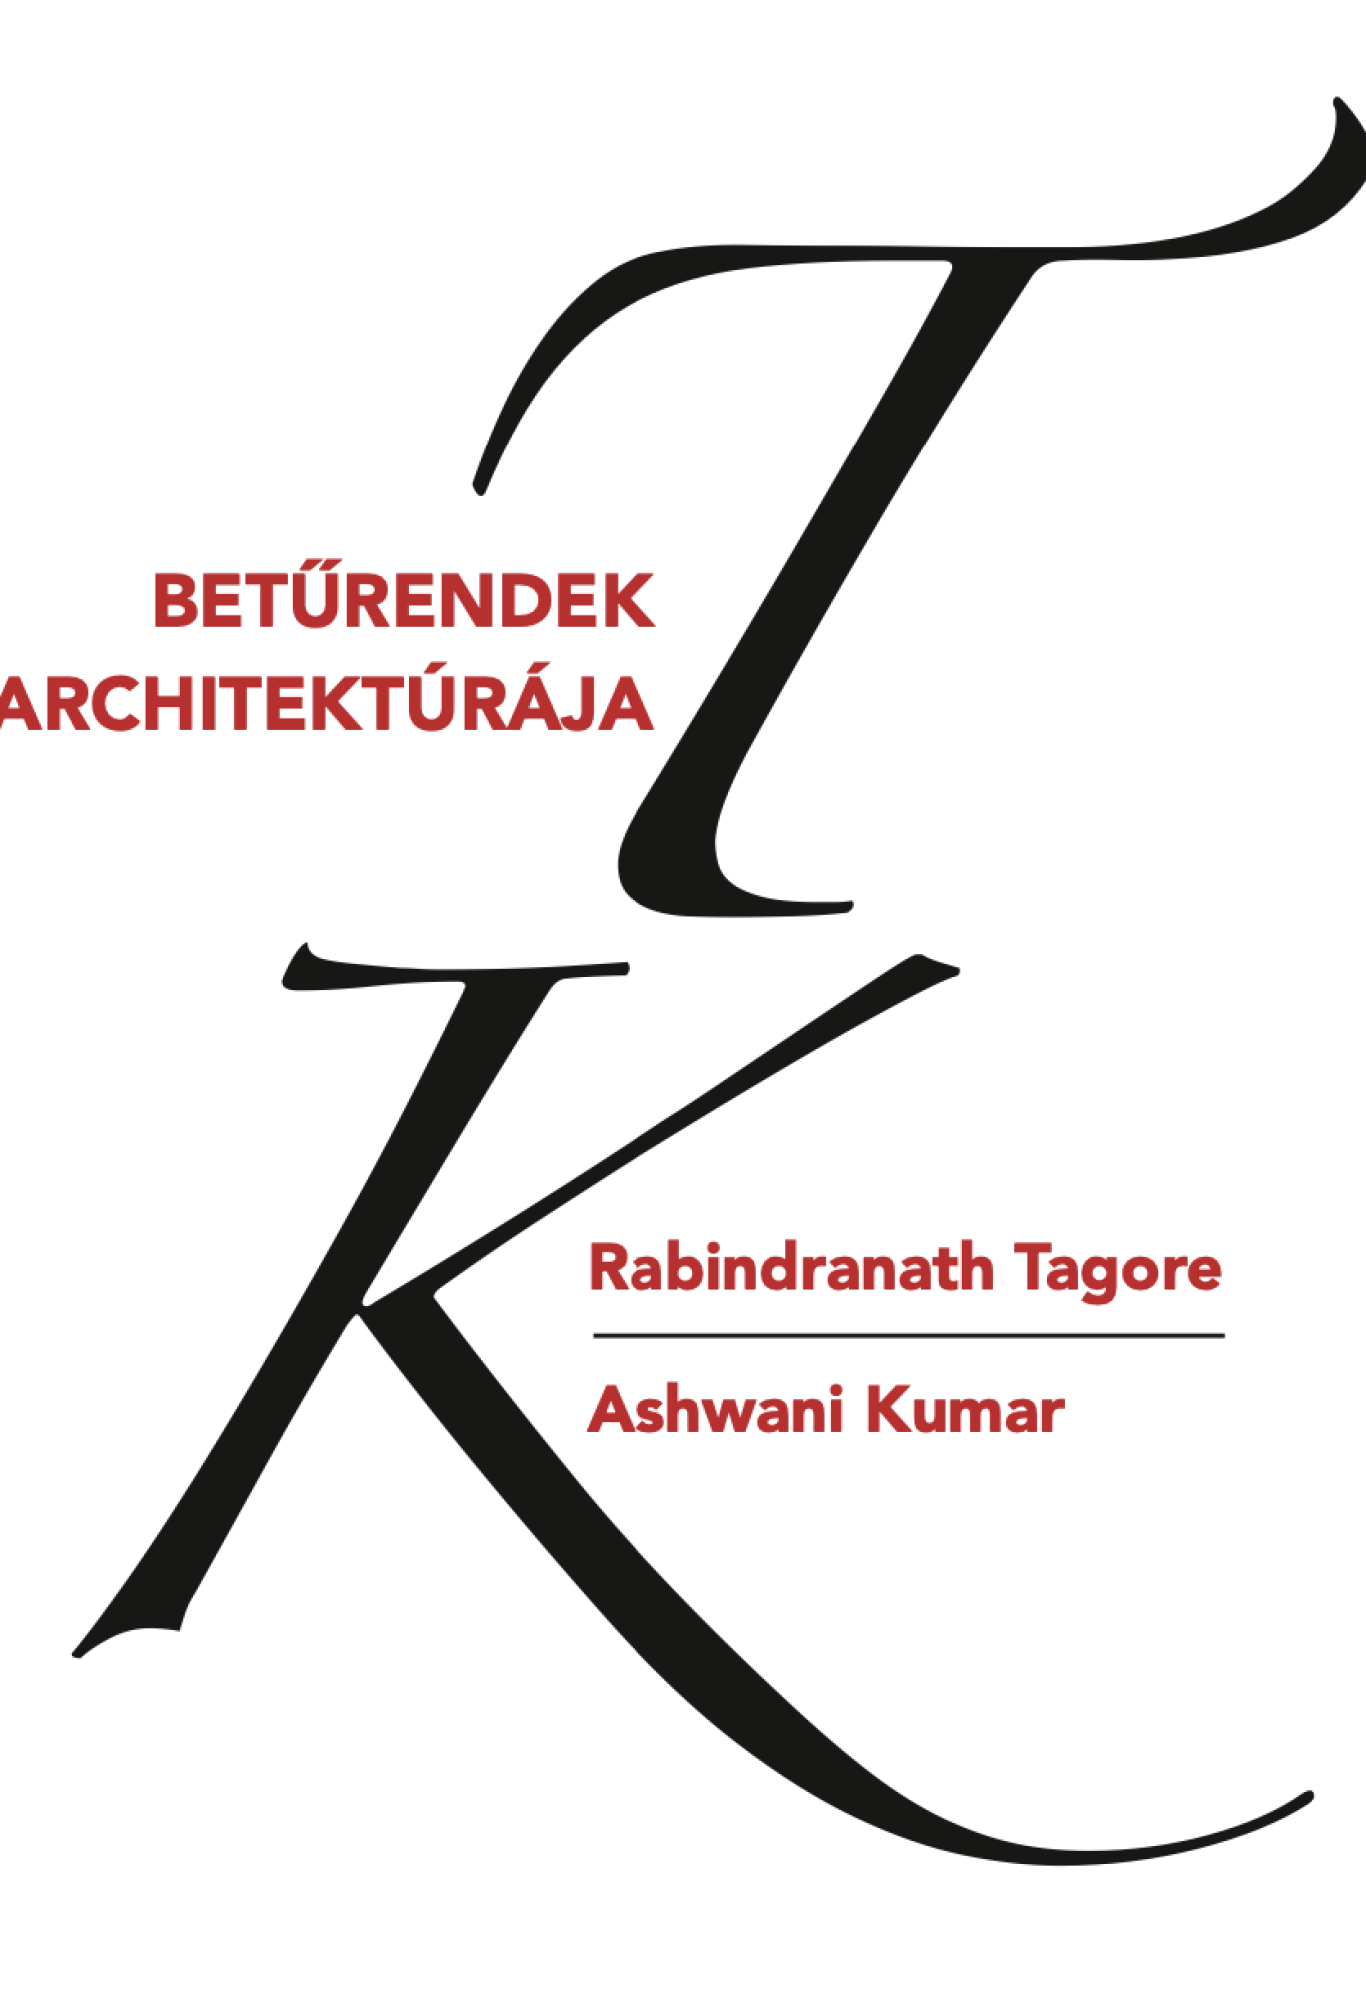 Rabindranath Tagore - Ashwani Kumar: BETŰRENDEK ARCHITEKTÚRÁJA 